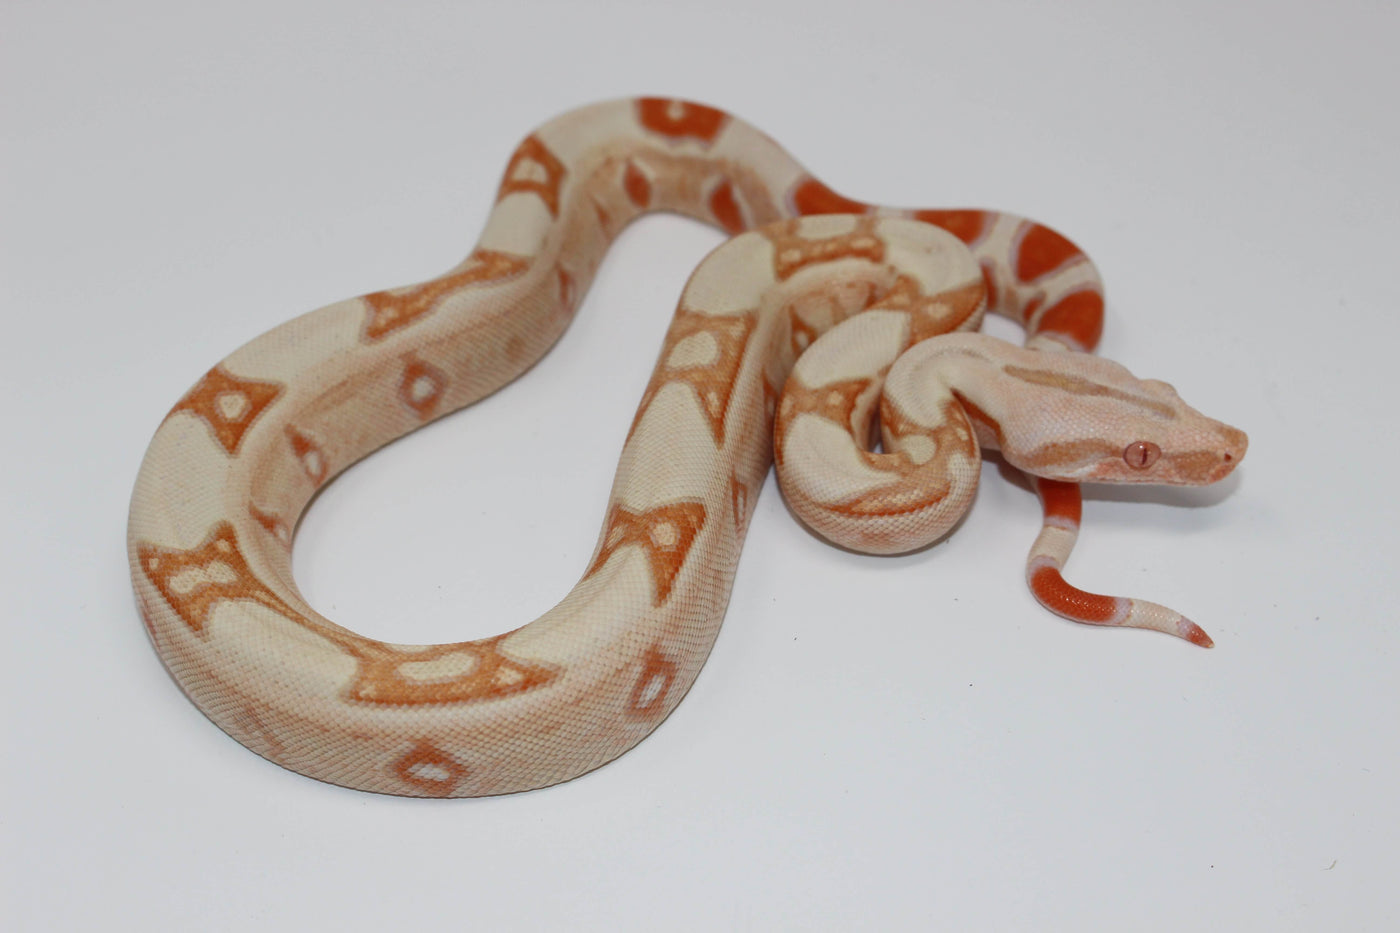 albino jungle colombian boa constrictor for sale, buy reptiles online